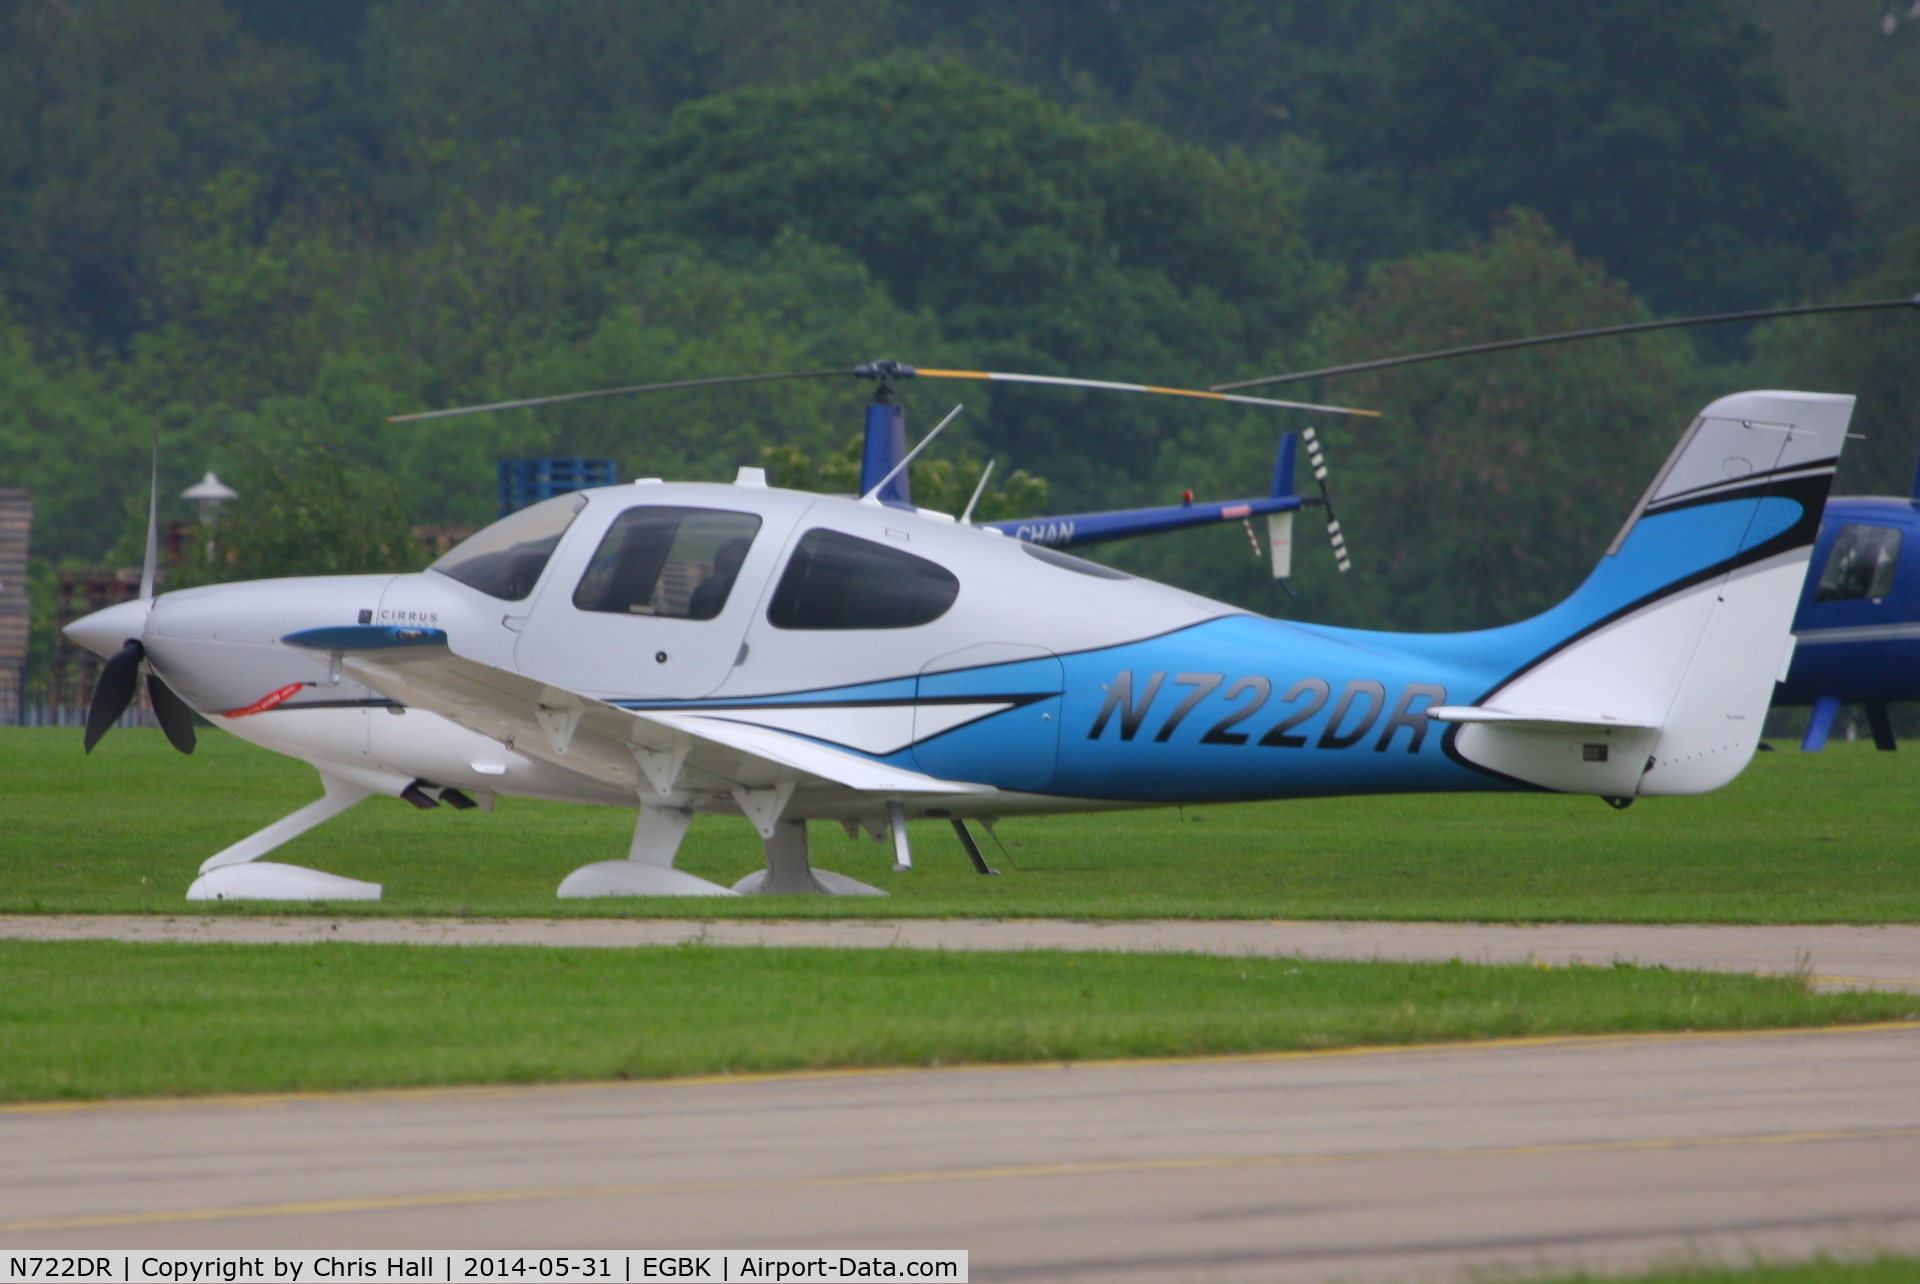 N722DR, 2013 Cirrus SR22T C/N 0523, at AeroExpo 2014